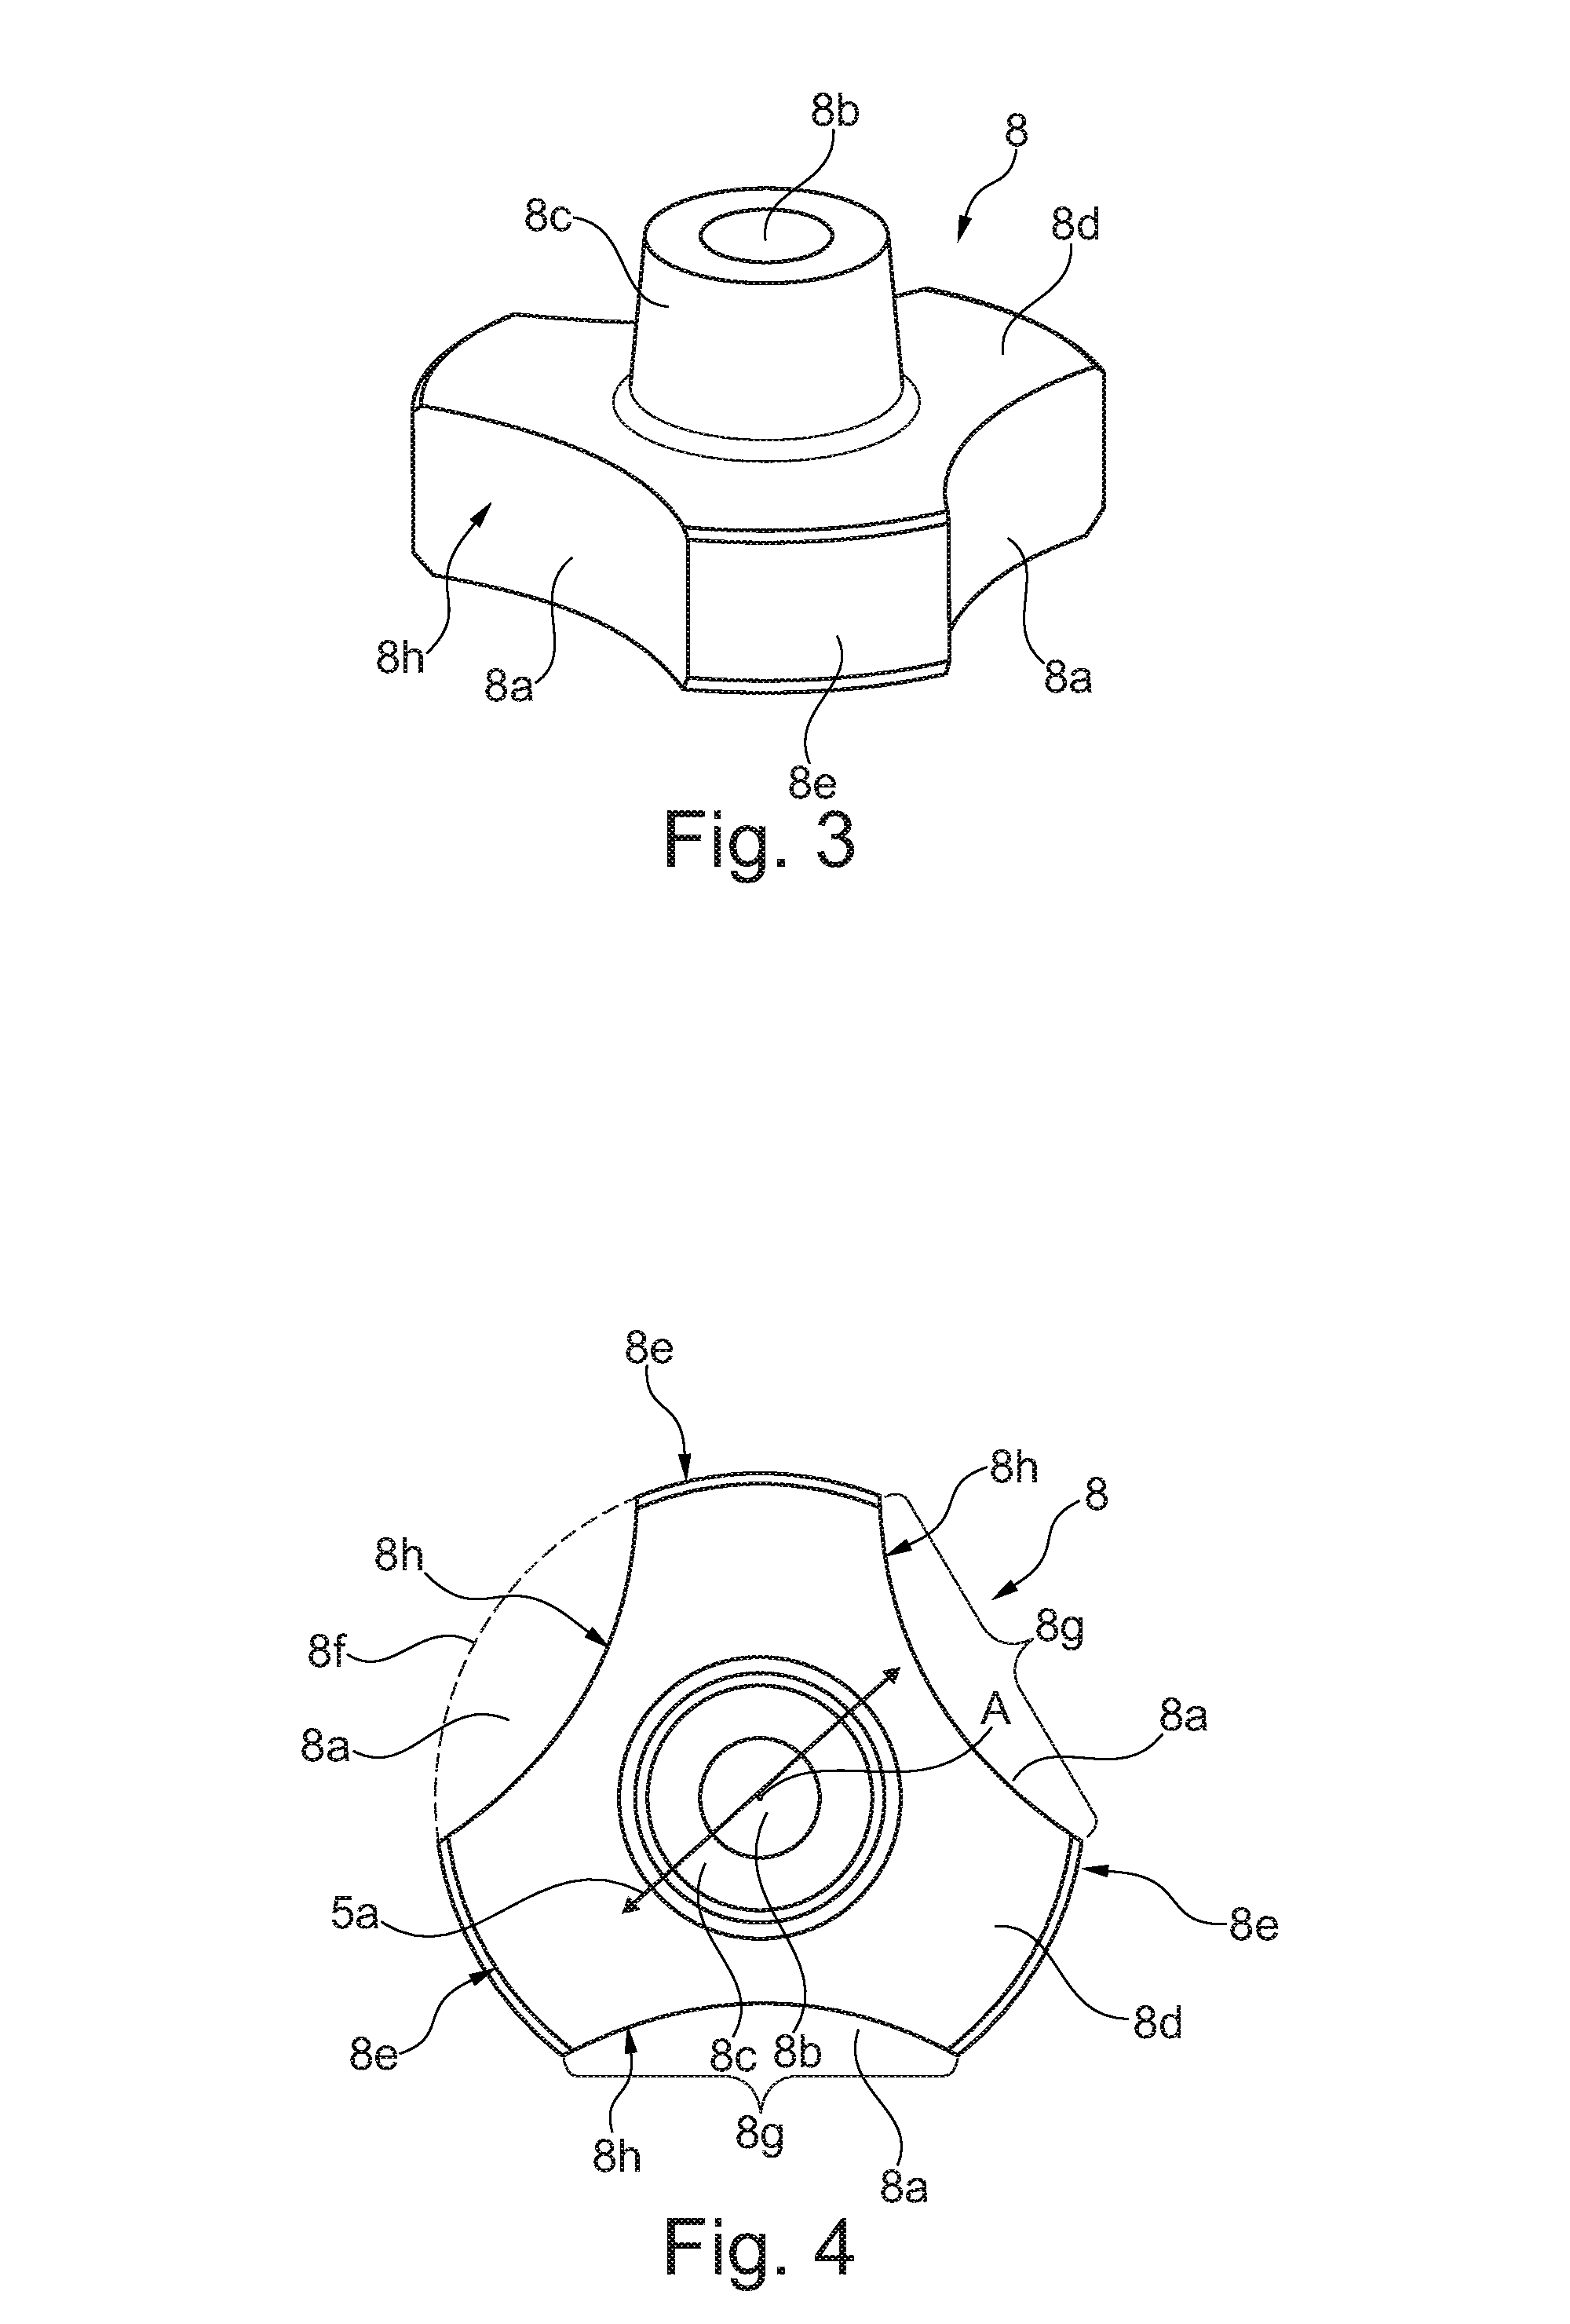 Poppet valve for a compressor